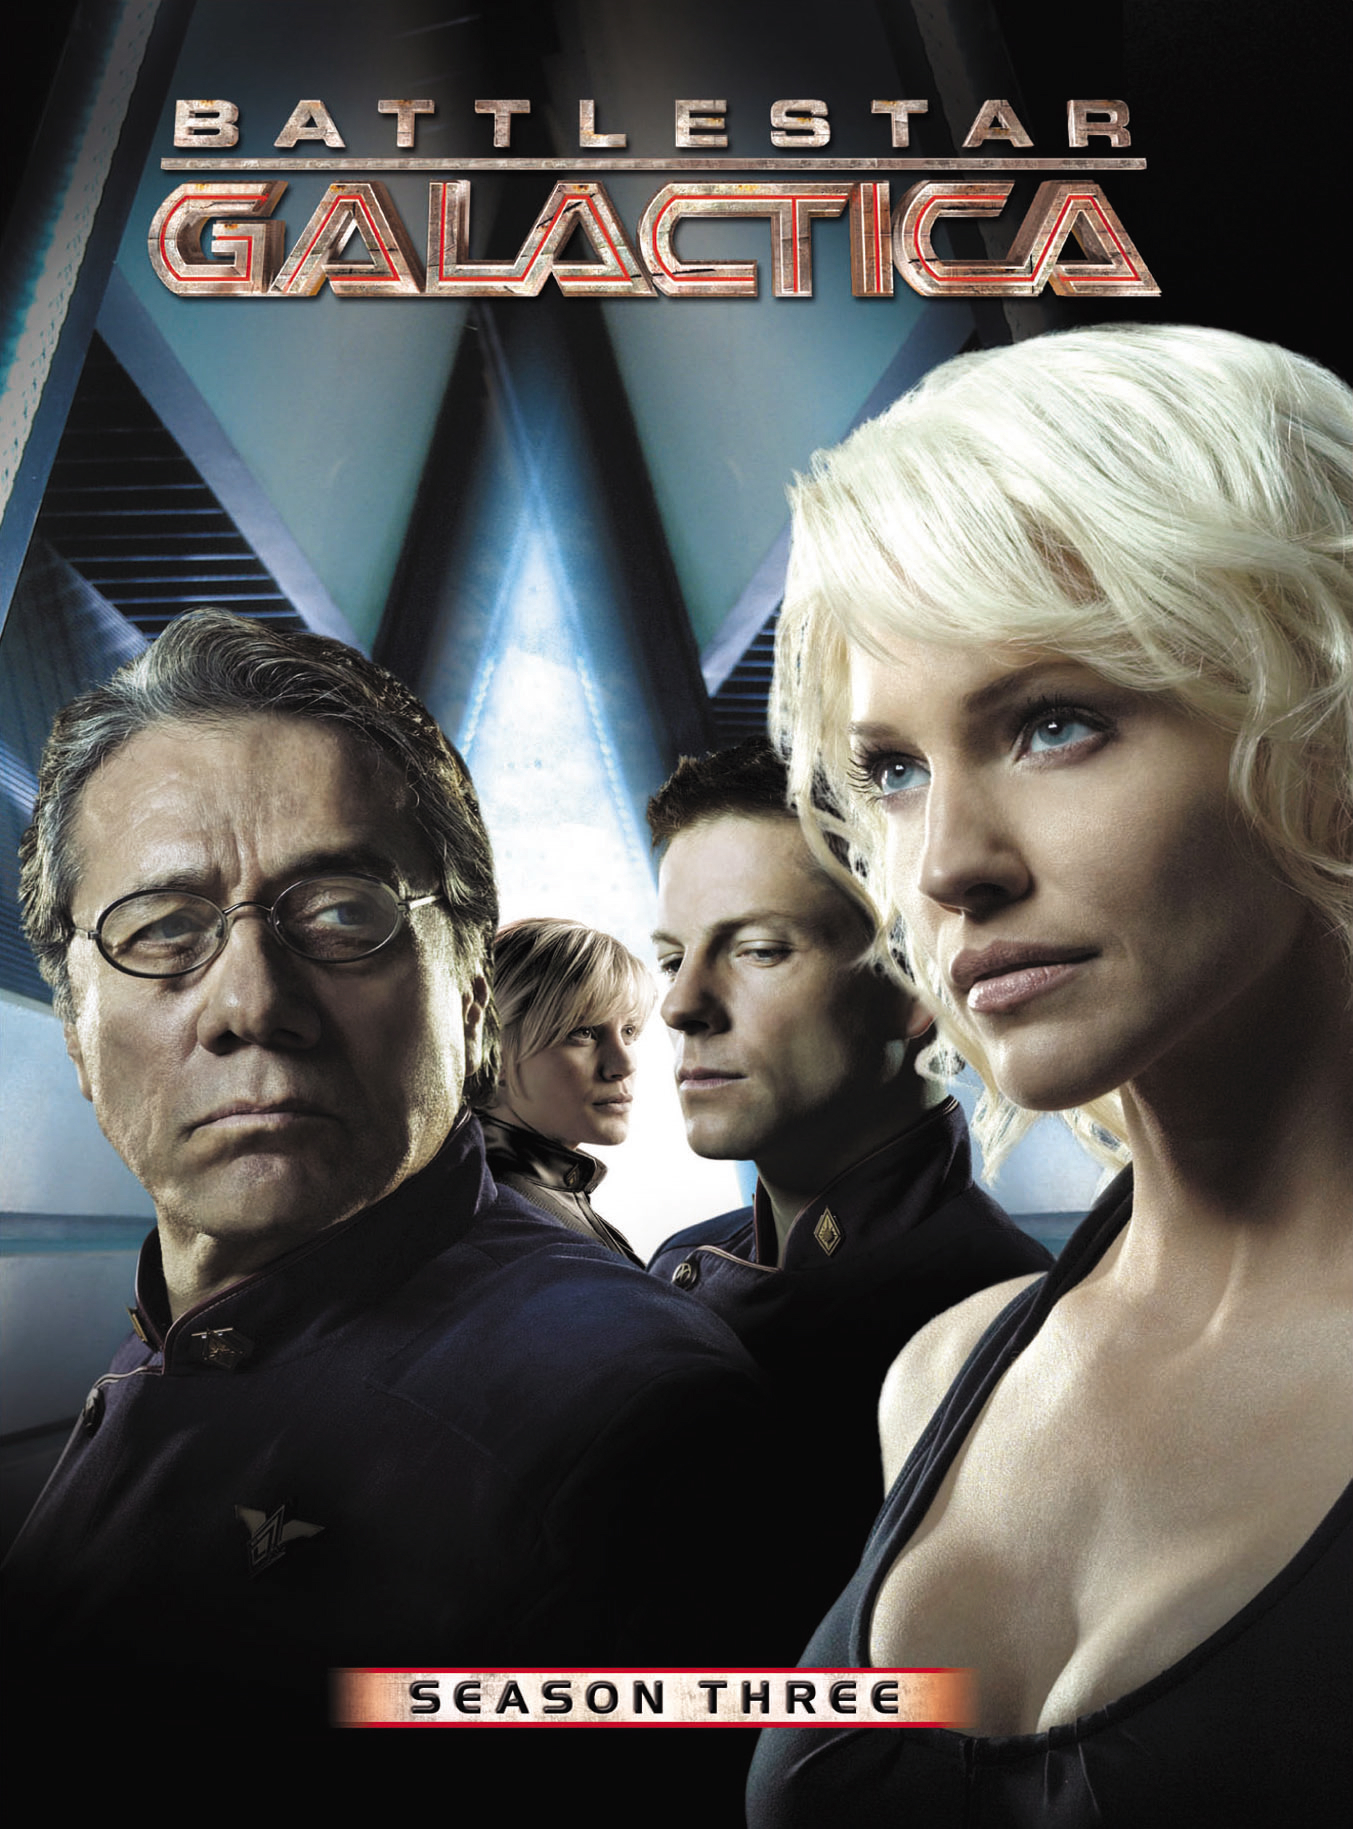 Battlestar Galactica: Season 3 - DVD   - Sci Fi Television On DVD - TV Shows On GRUV